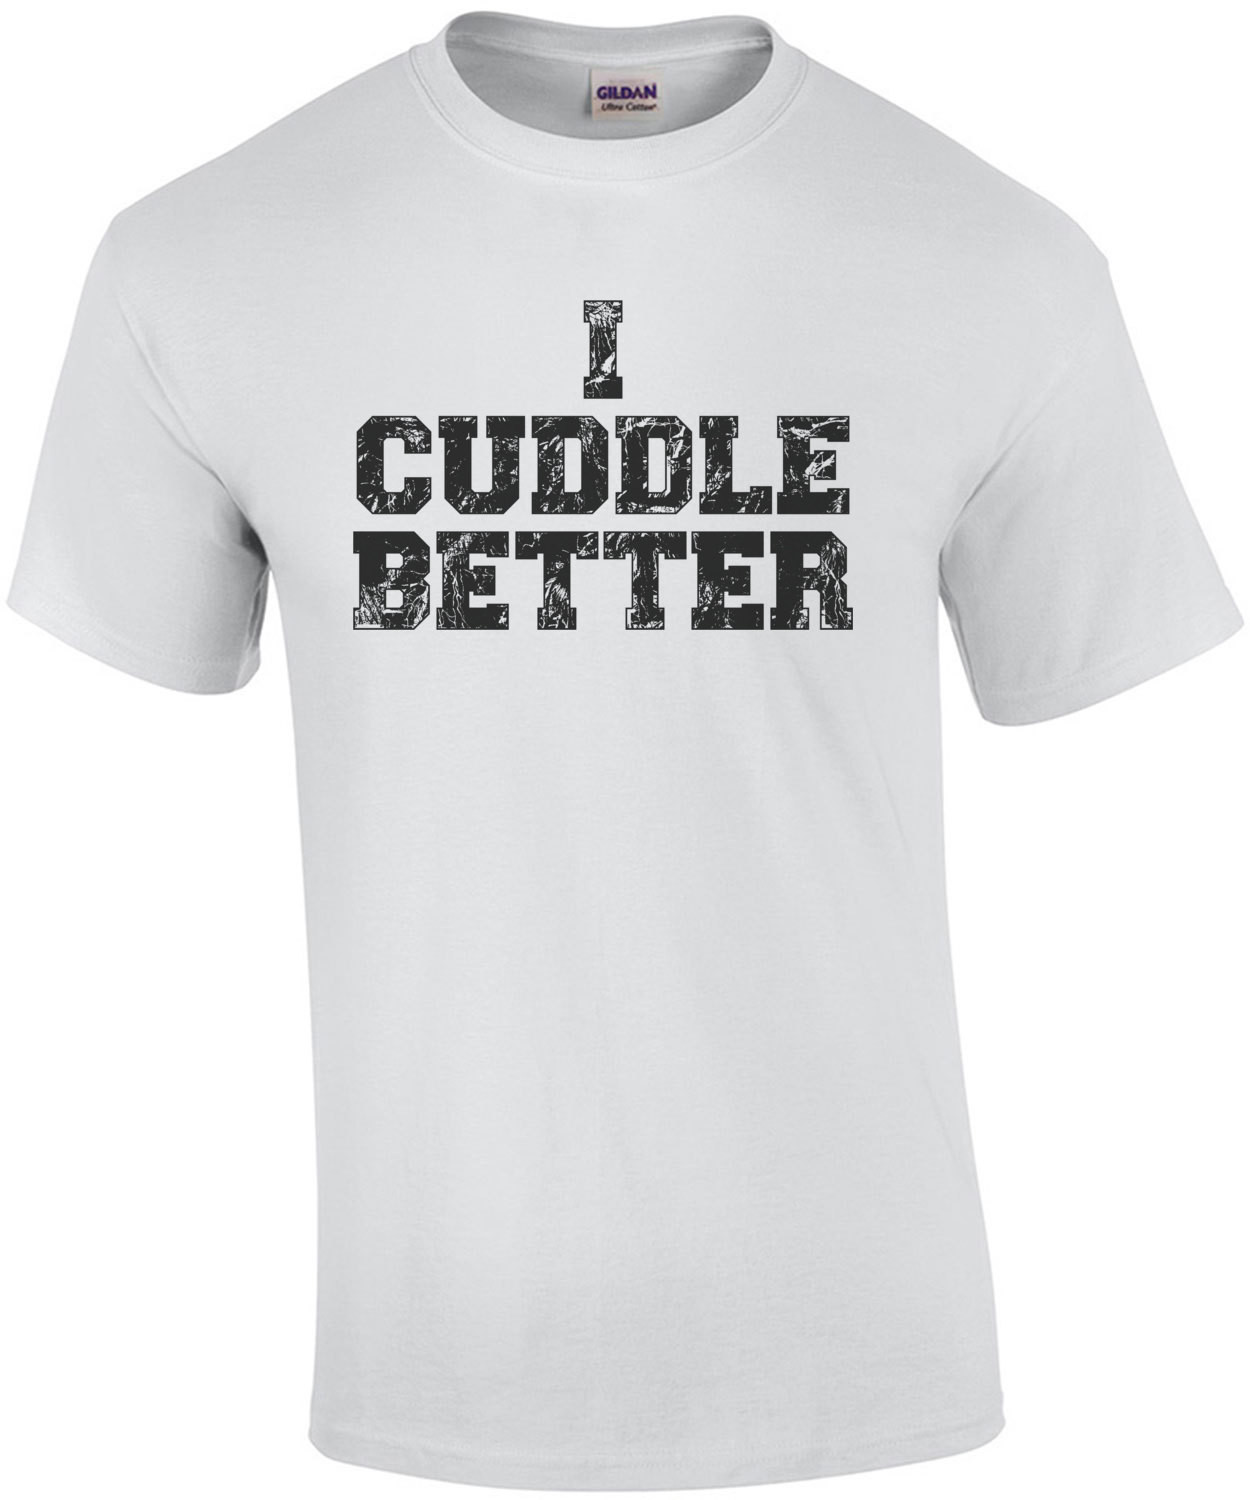 I Cuddle Better T-Shirt